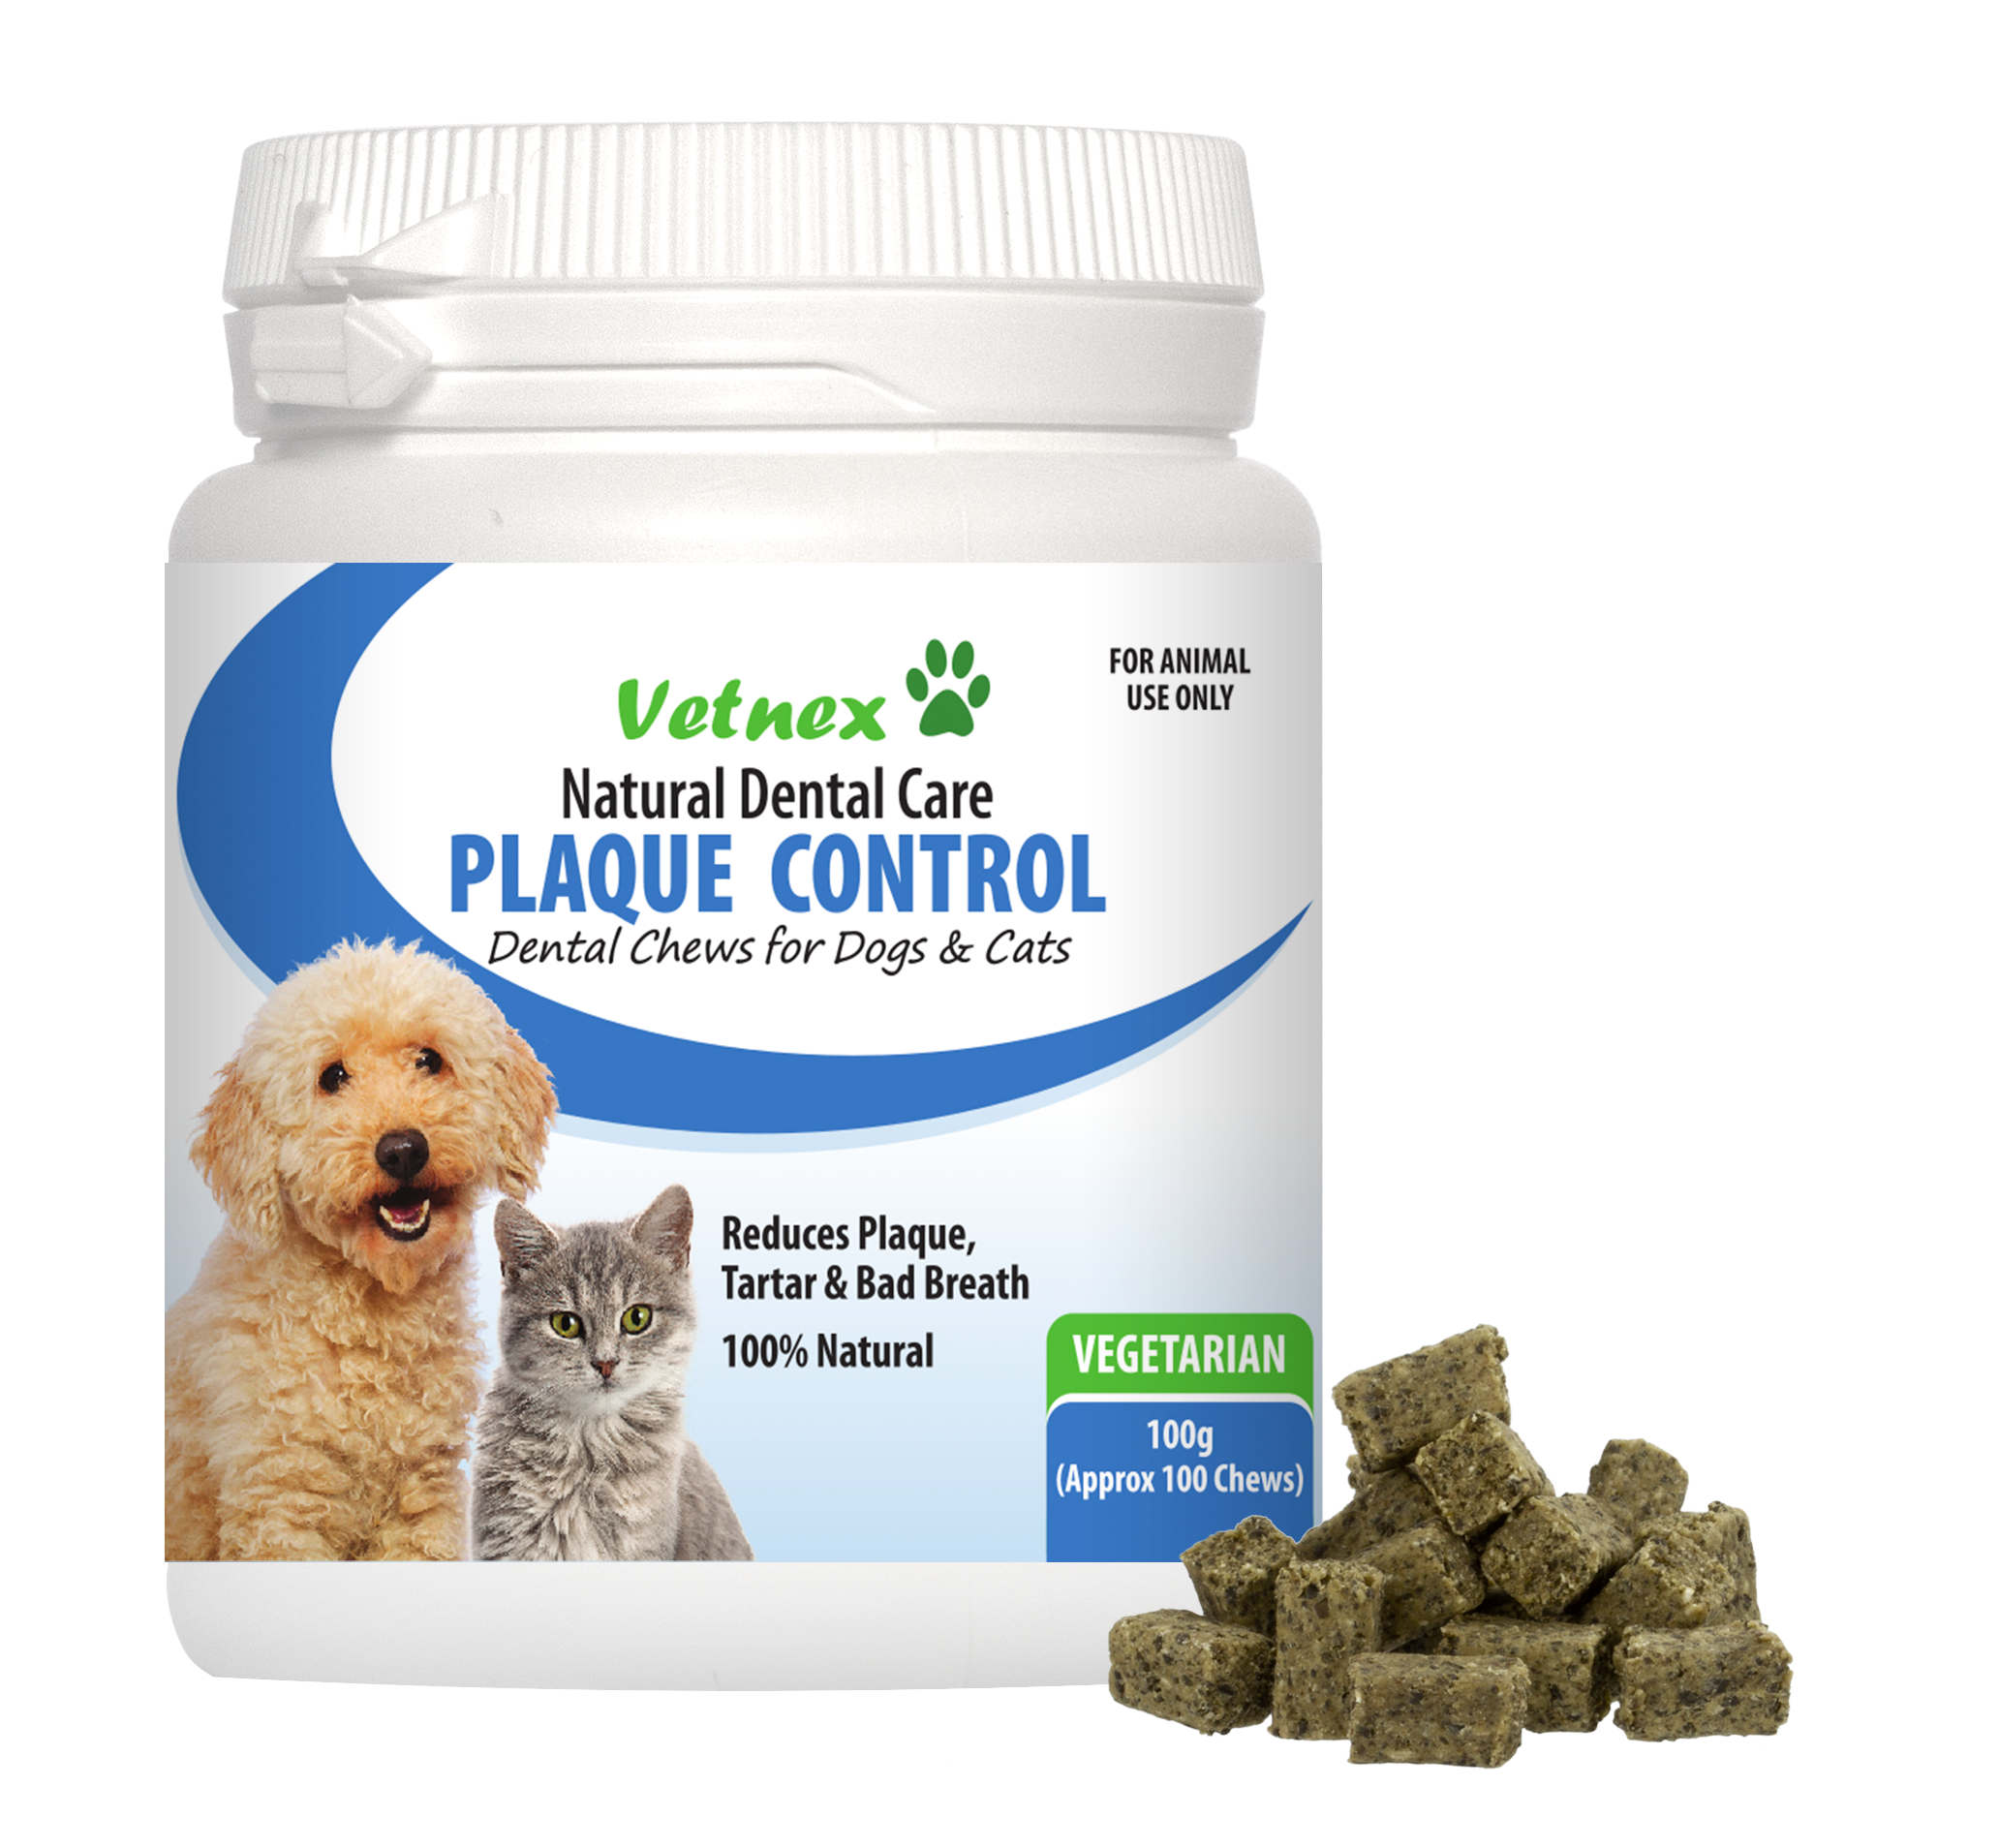 Vetnex Plaque Control Dental Chews (Vegetarian) for Dogs & Cats 100g/100 chews